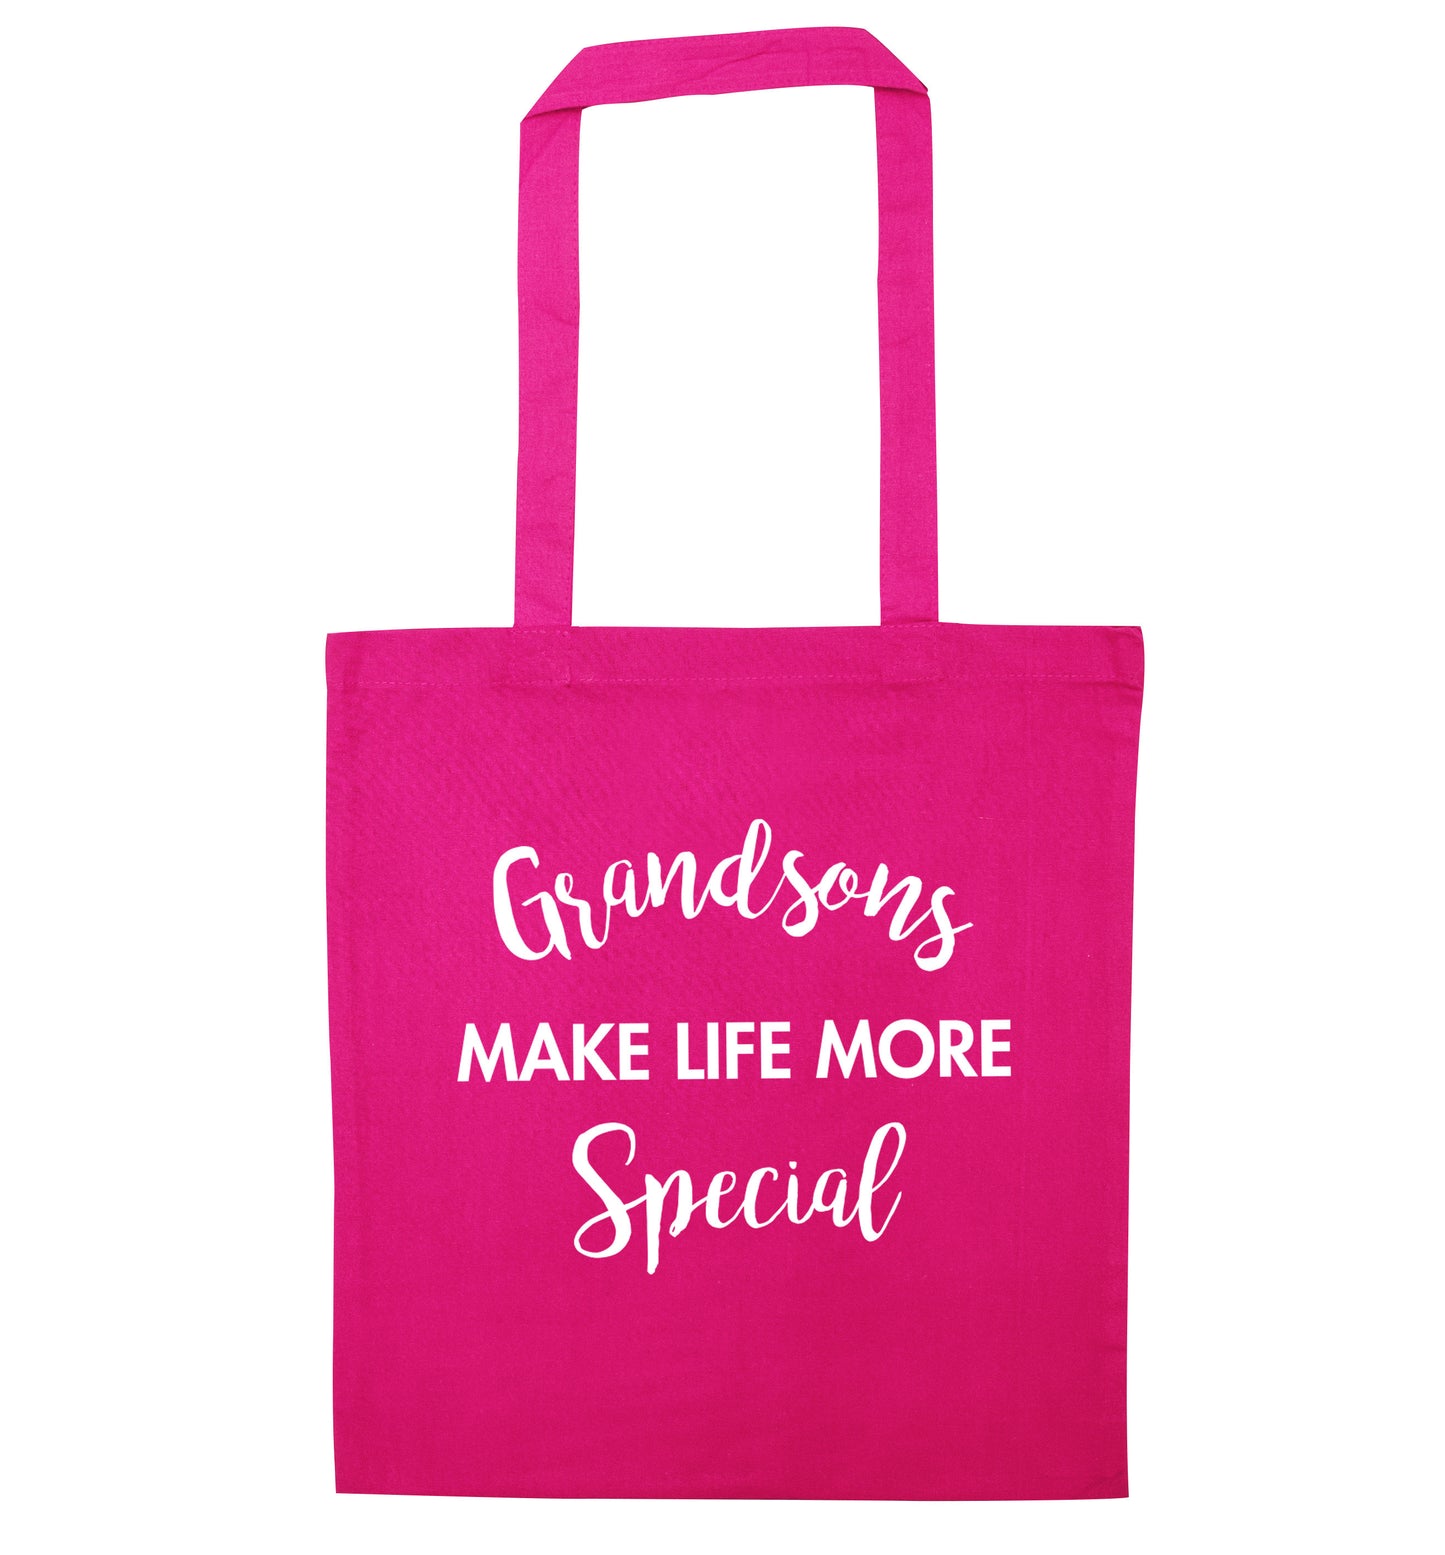 Grandsons make life more special pink tote bag